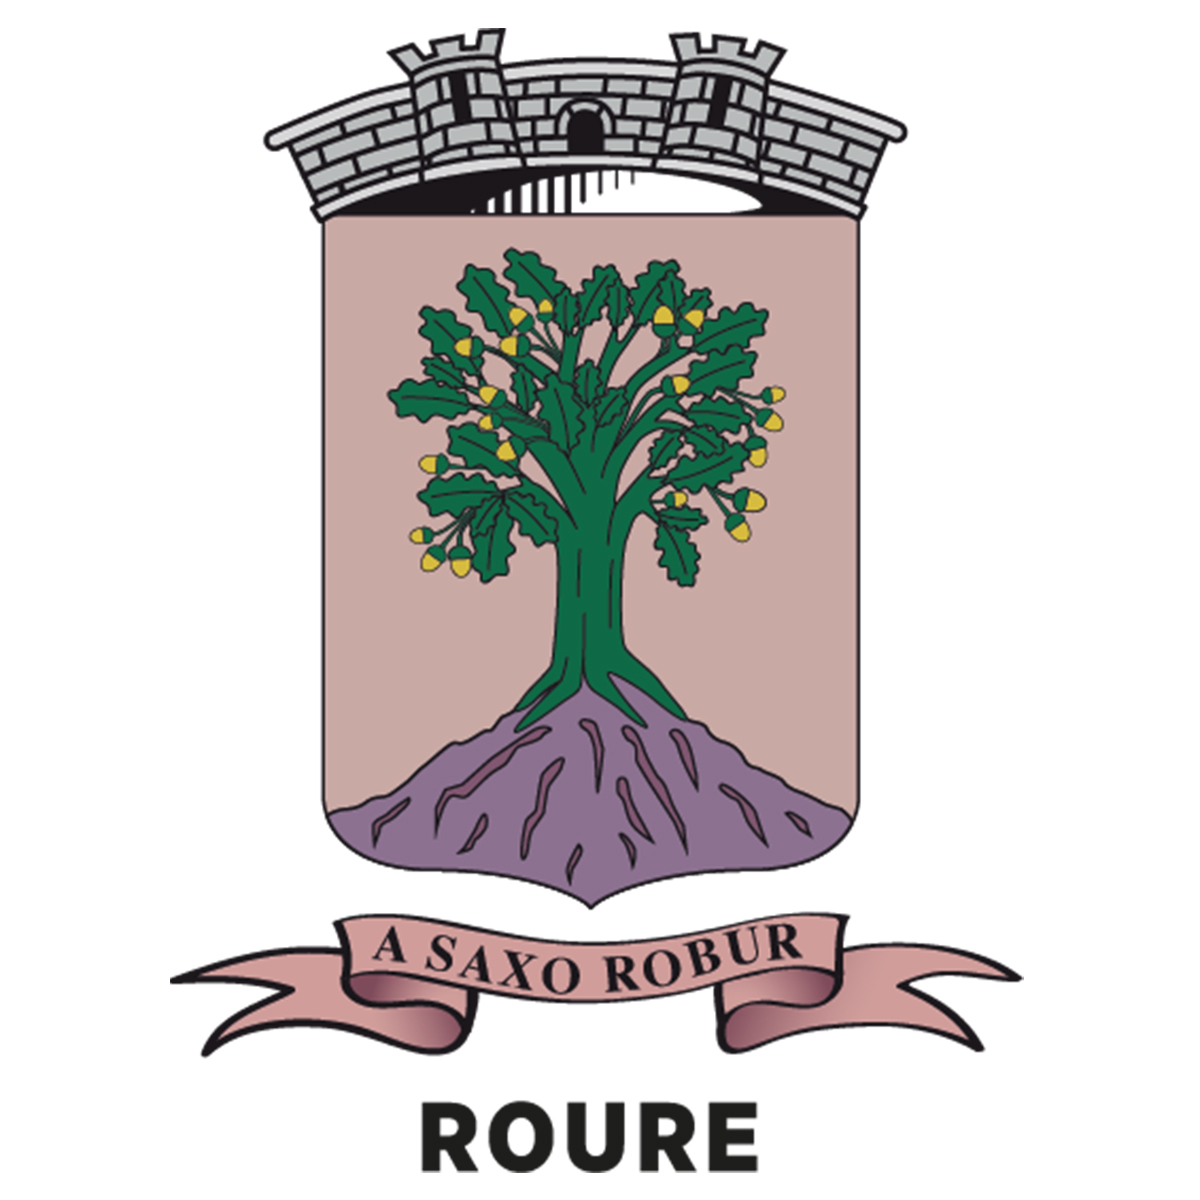 Commune de Roure